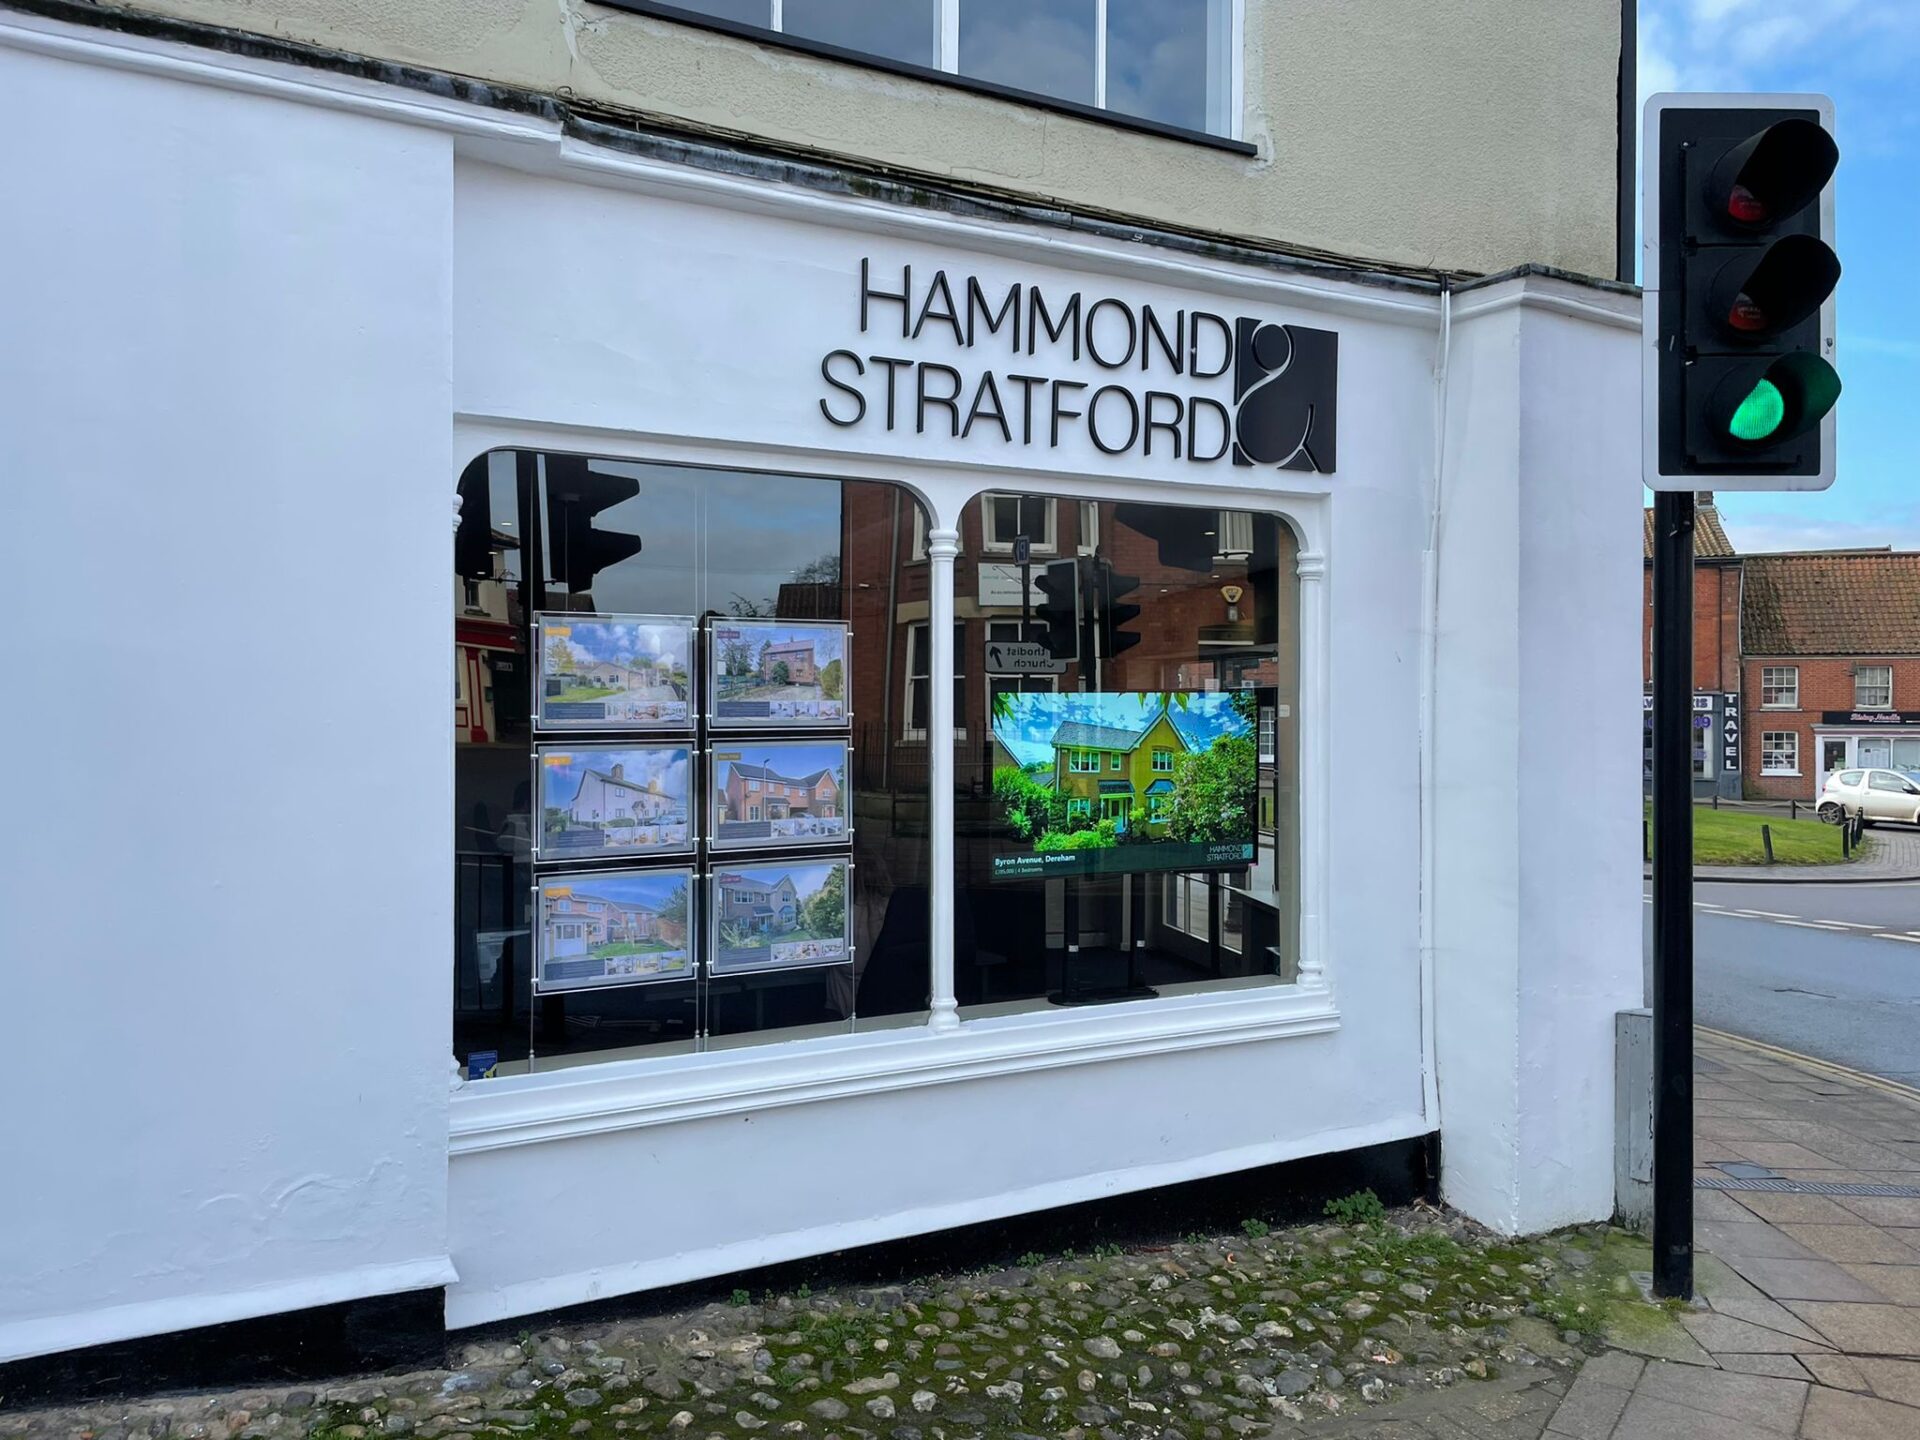 Hammond and Stratford